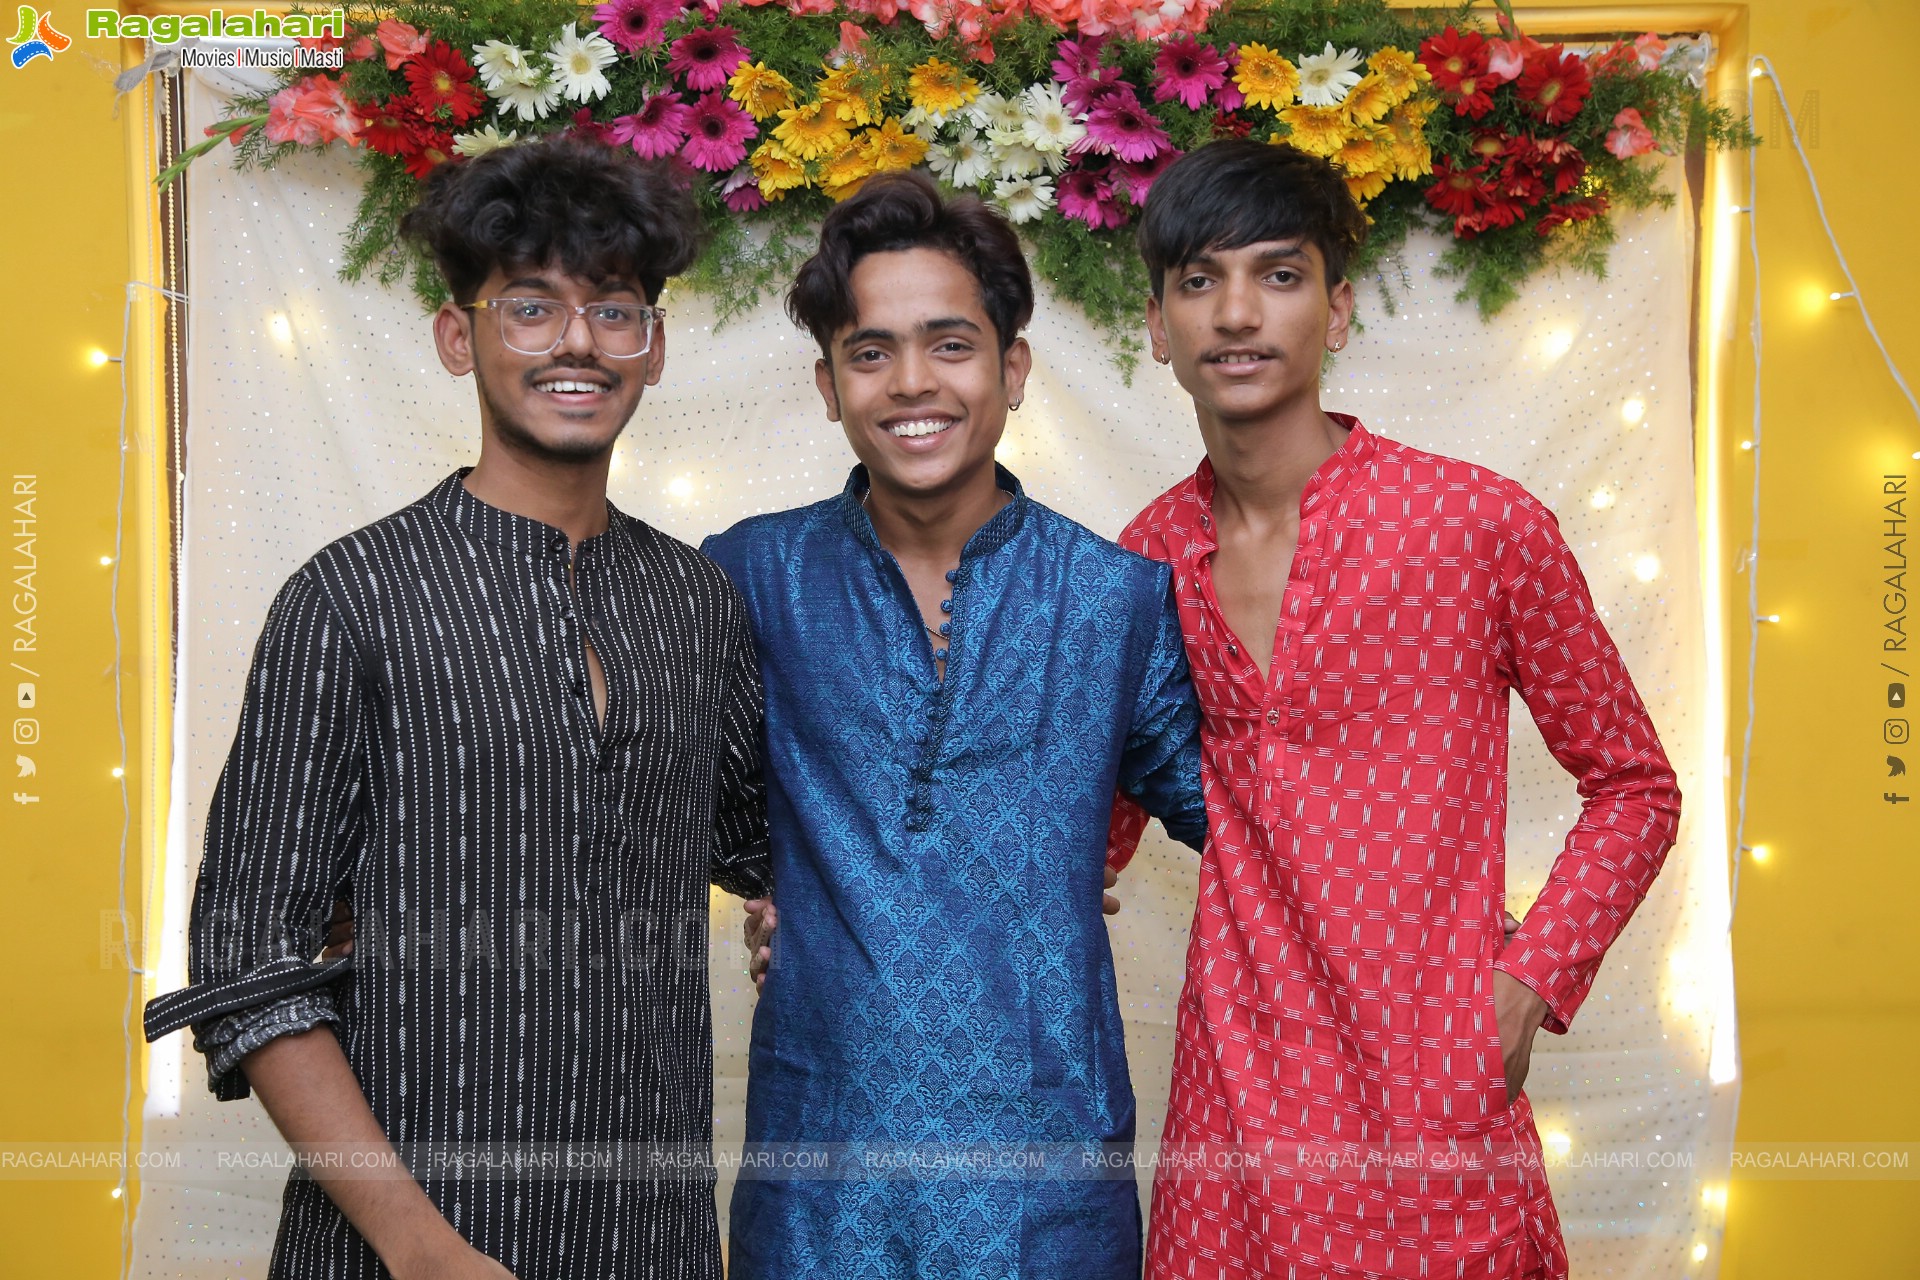 Lakhotia College Of Fashion Design Celebrates The Ethnic Day 2022 at Banjara Hills Campus, Hyderabad